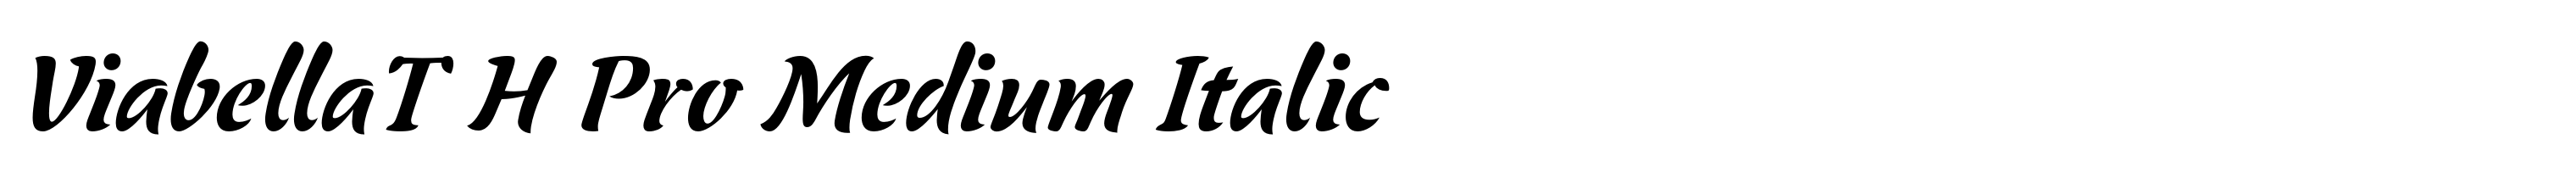 ViabellaT H Pro Medium Italic